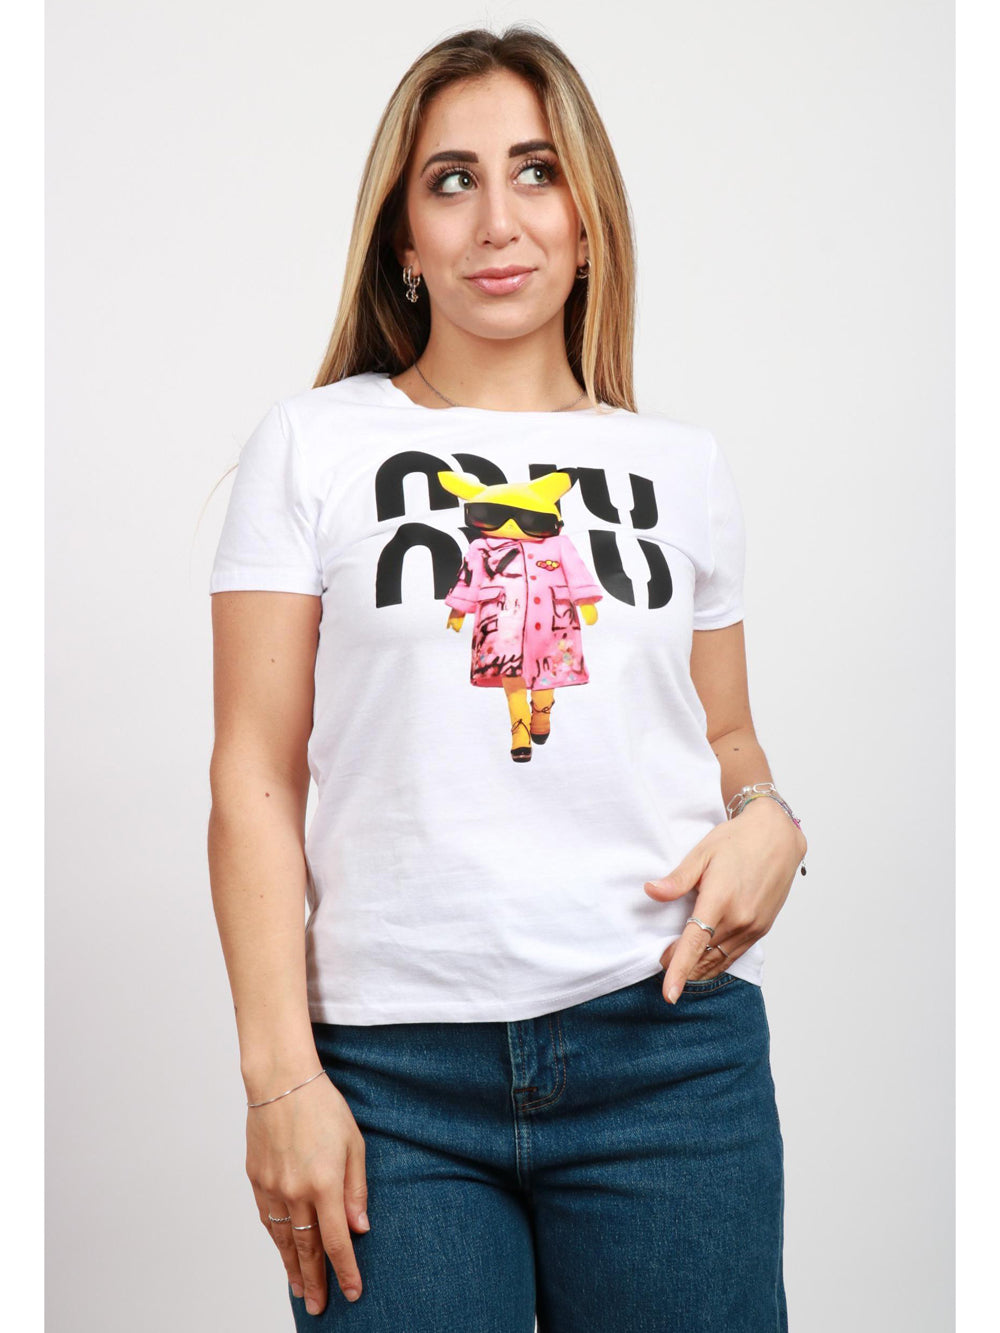 DBSOUL T-Shirt Rimini Bianca con Stampa Pikachu e Miu Miu Bianco